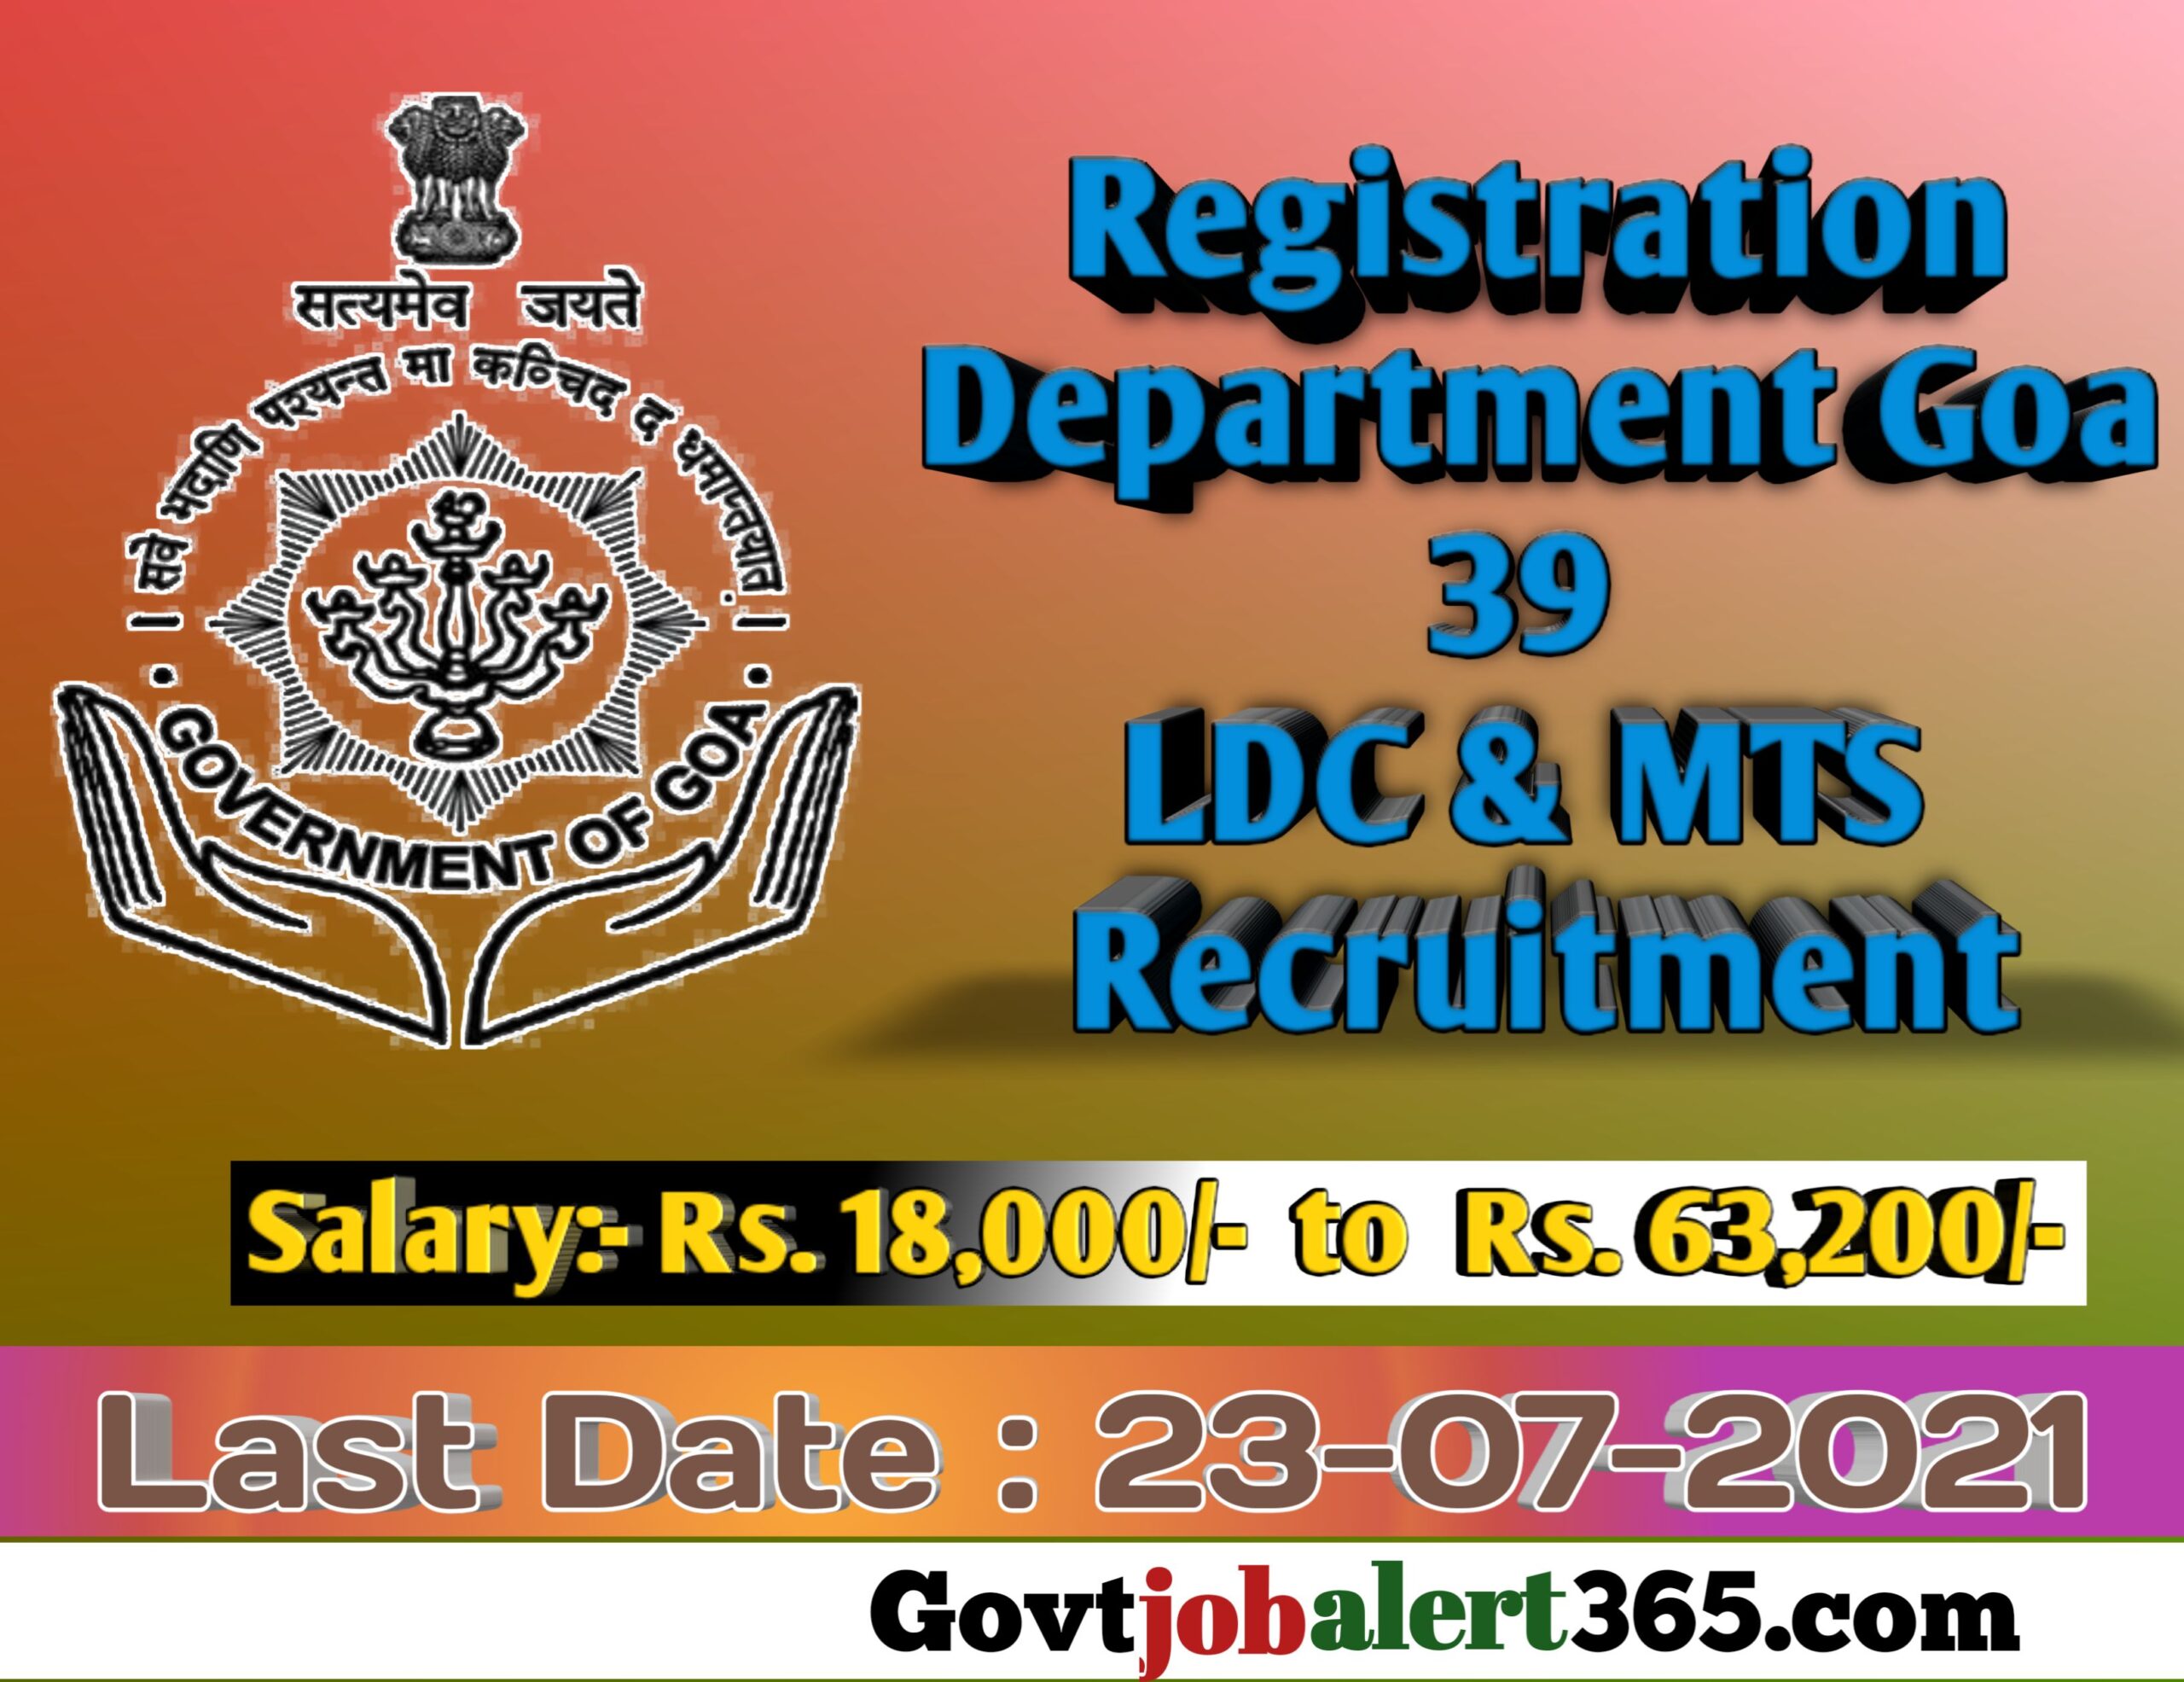 Government of Goa LDC & MTS Recruitment 2021